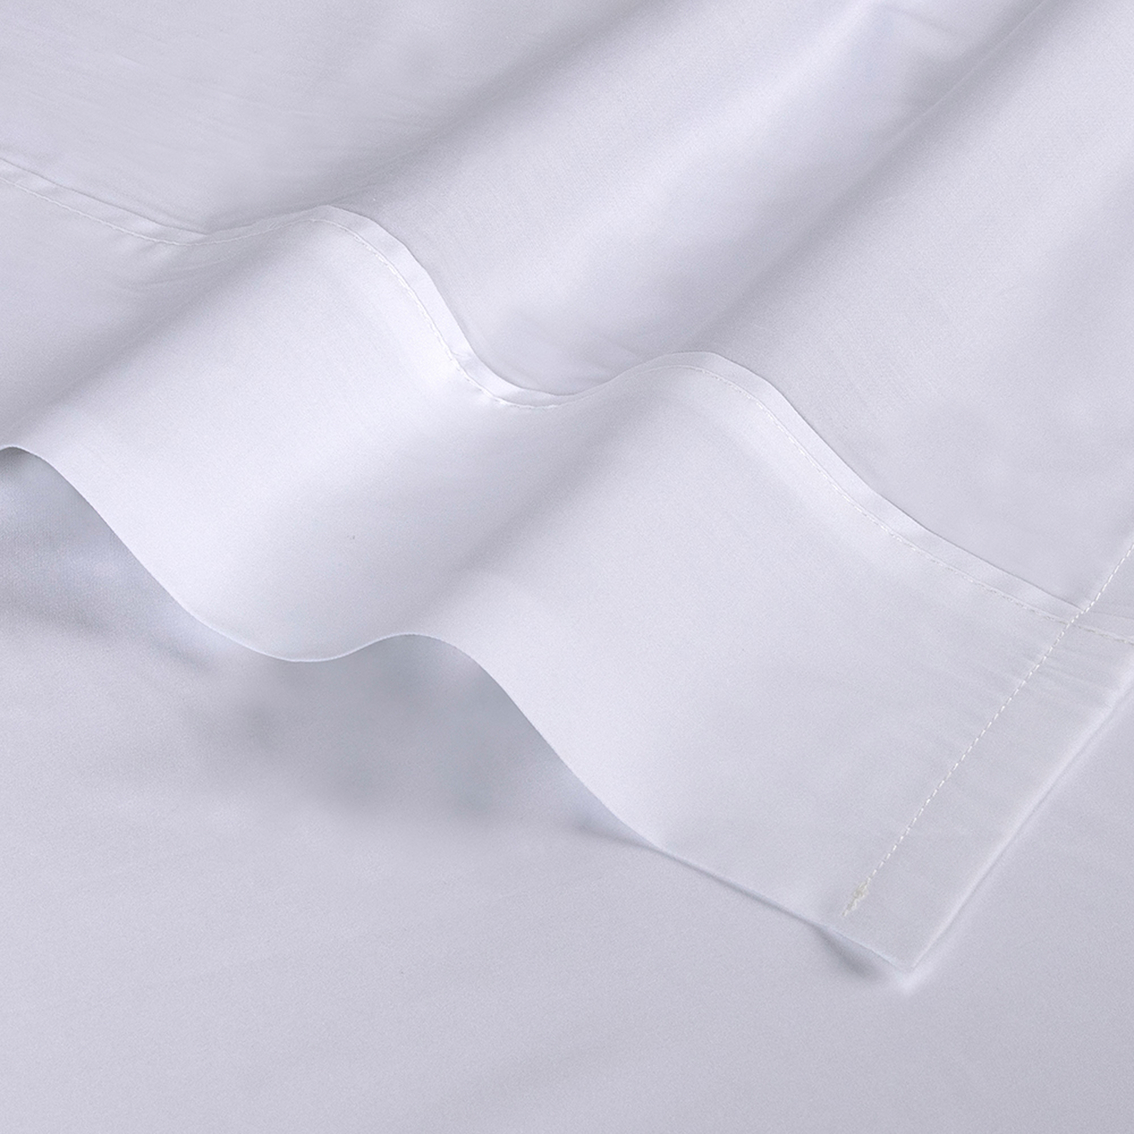 Bedgear Hyper-Cotton Performance Sheet Set - Image 4 of 6